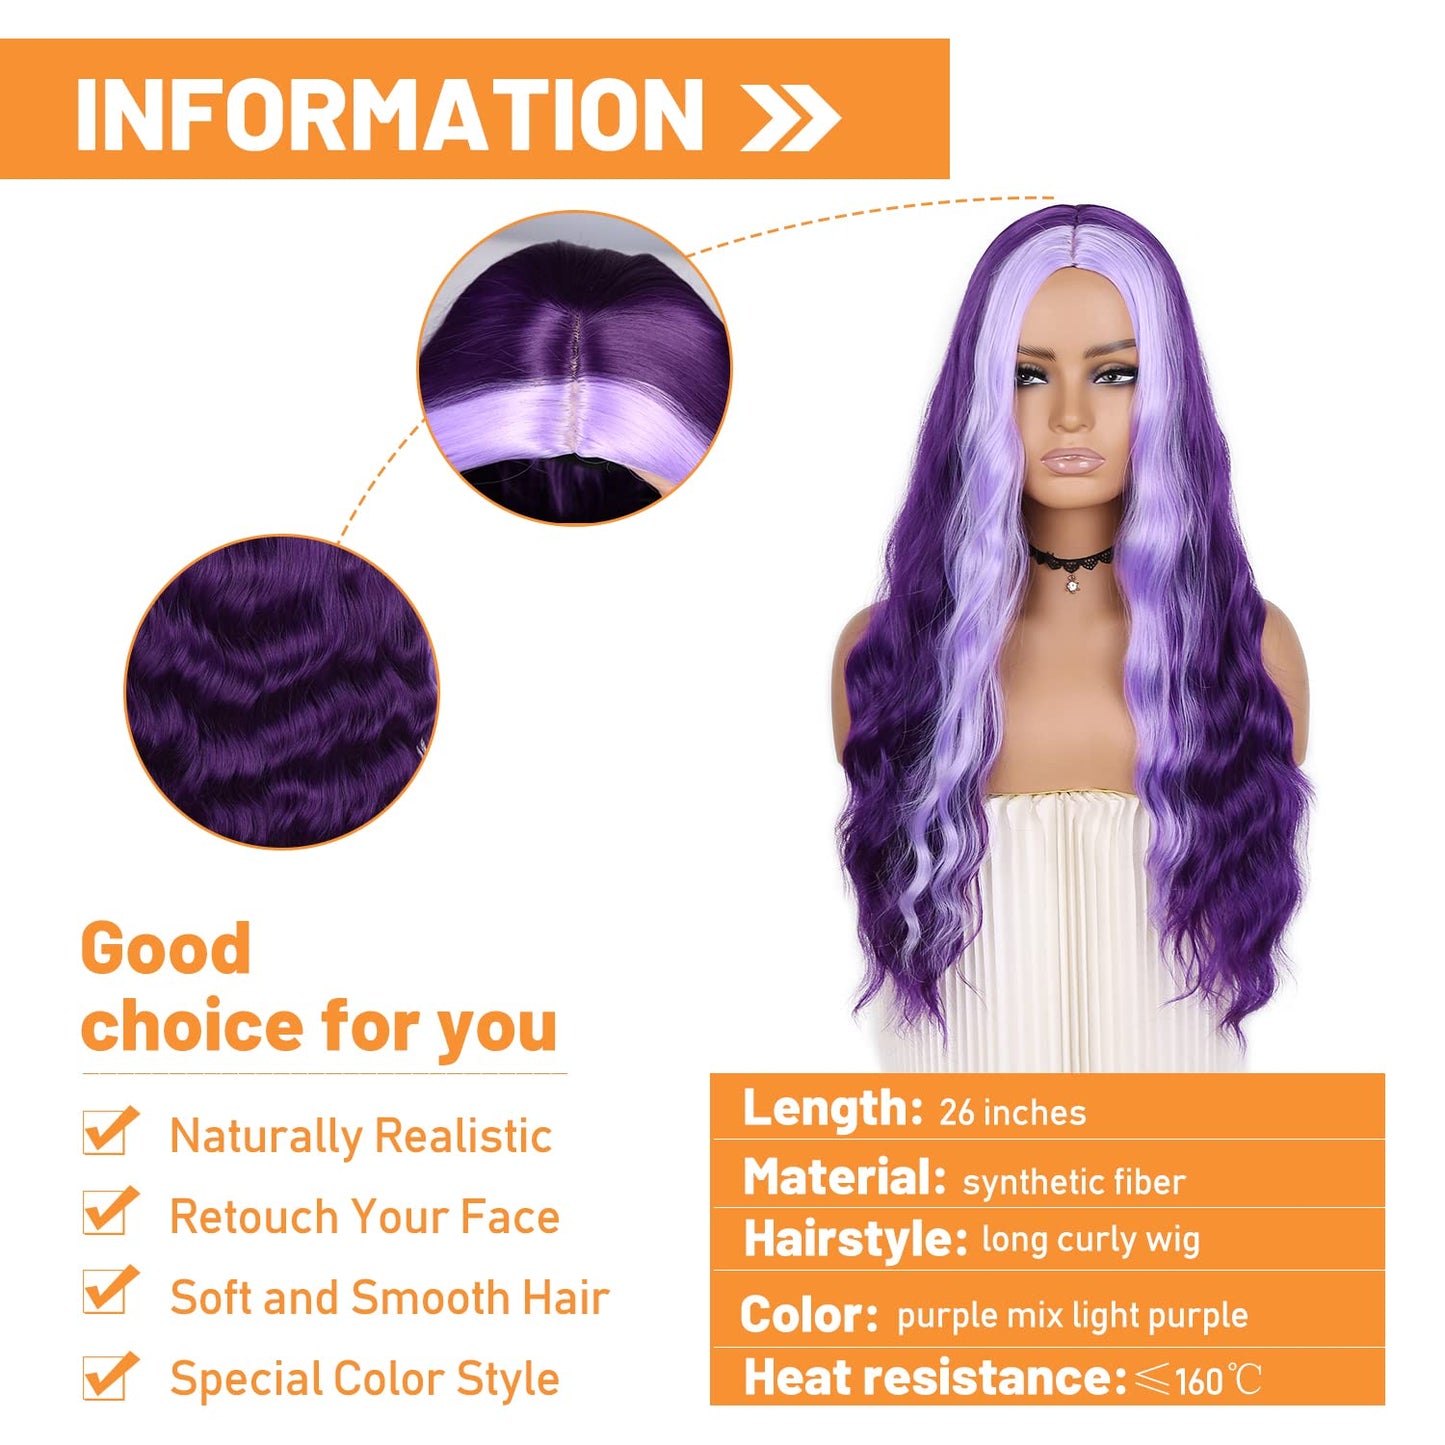 Light Purple Highlight Curly Wig